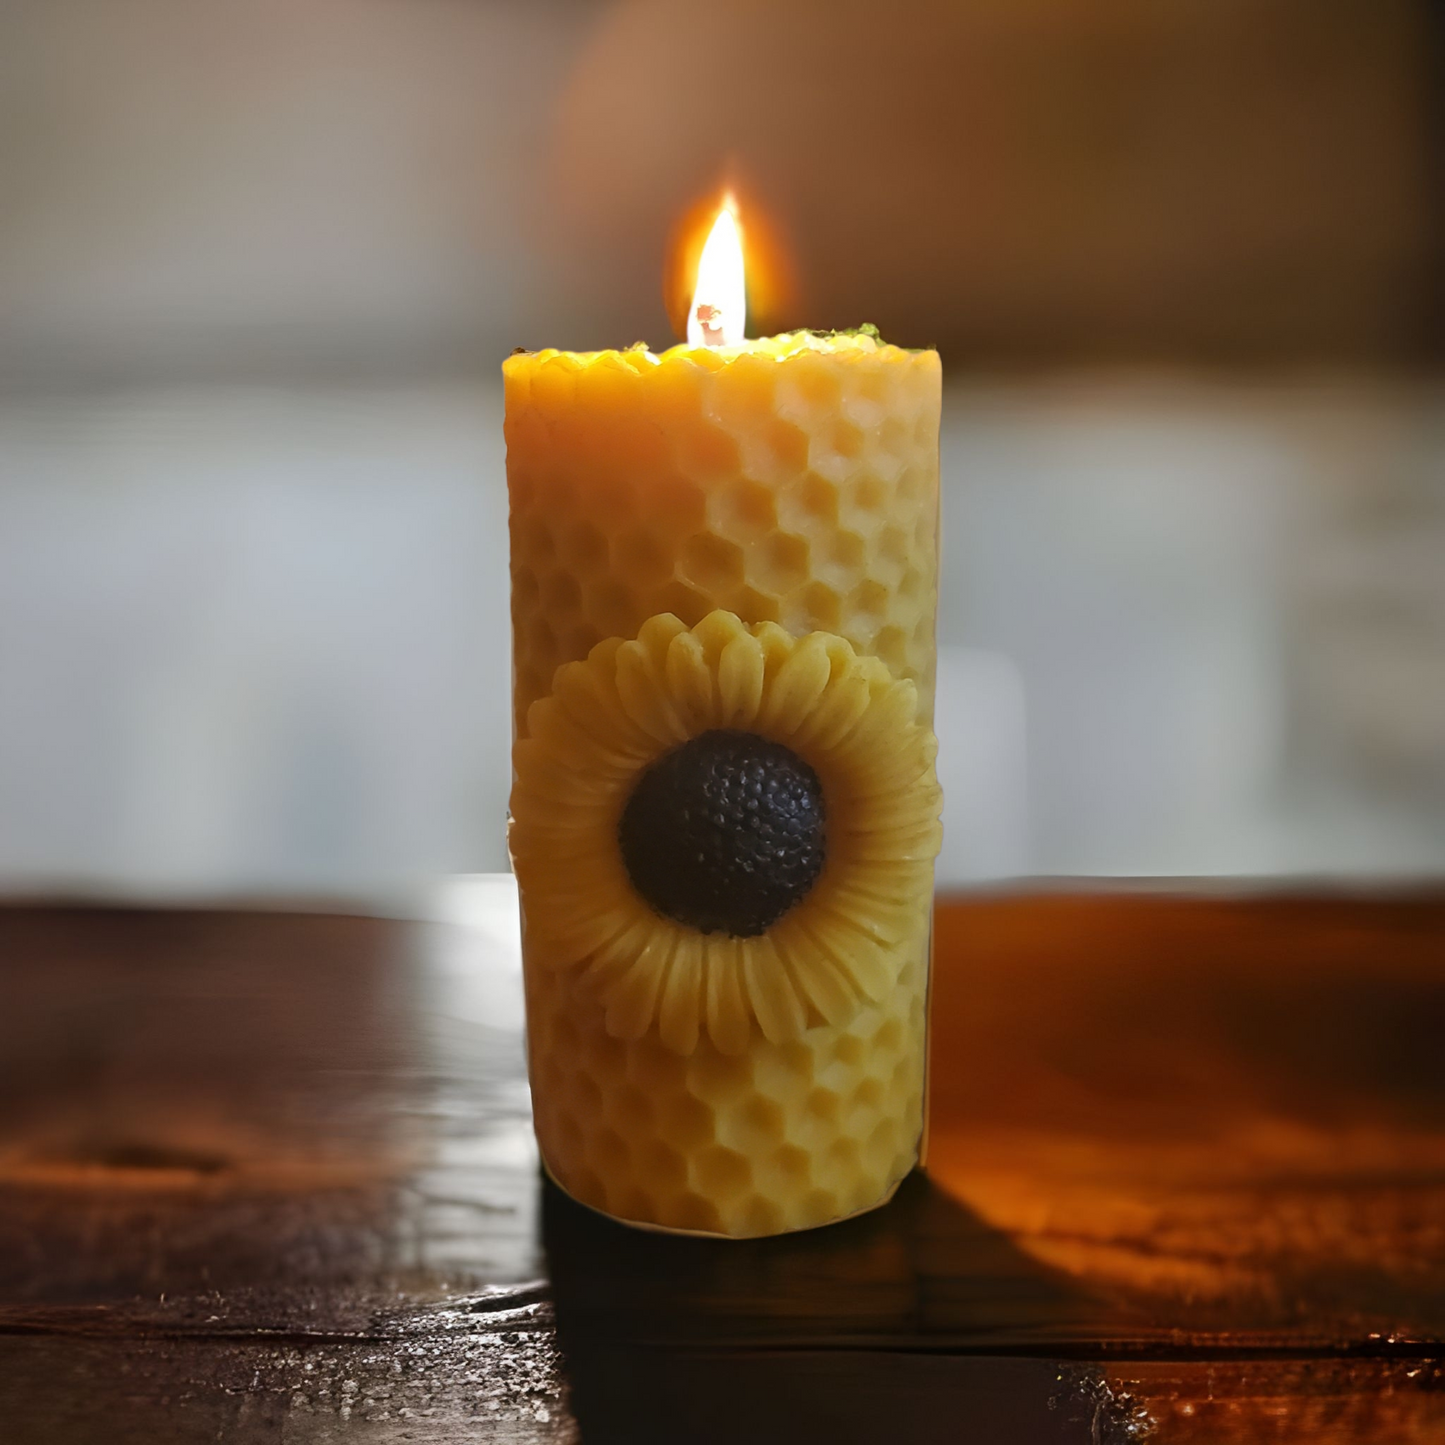 Honeycomb Sunflower Candle